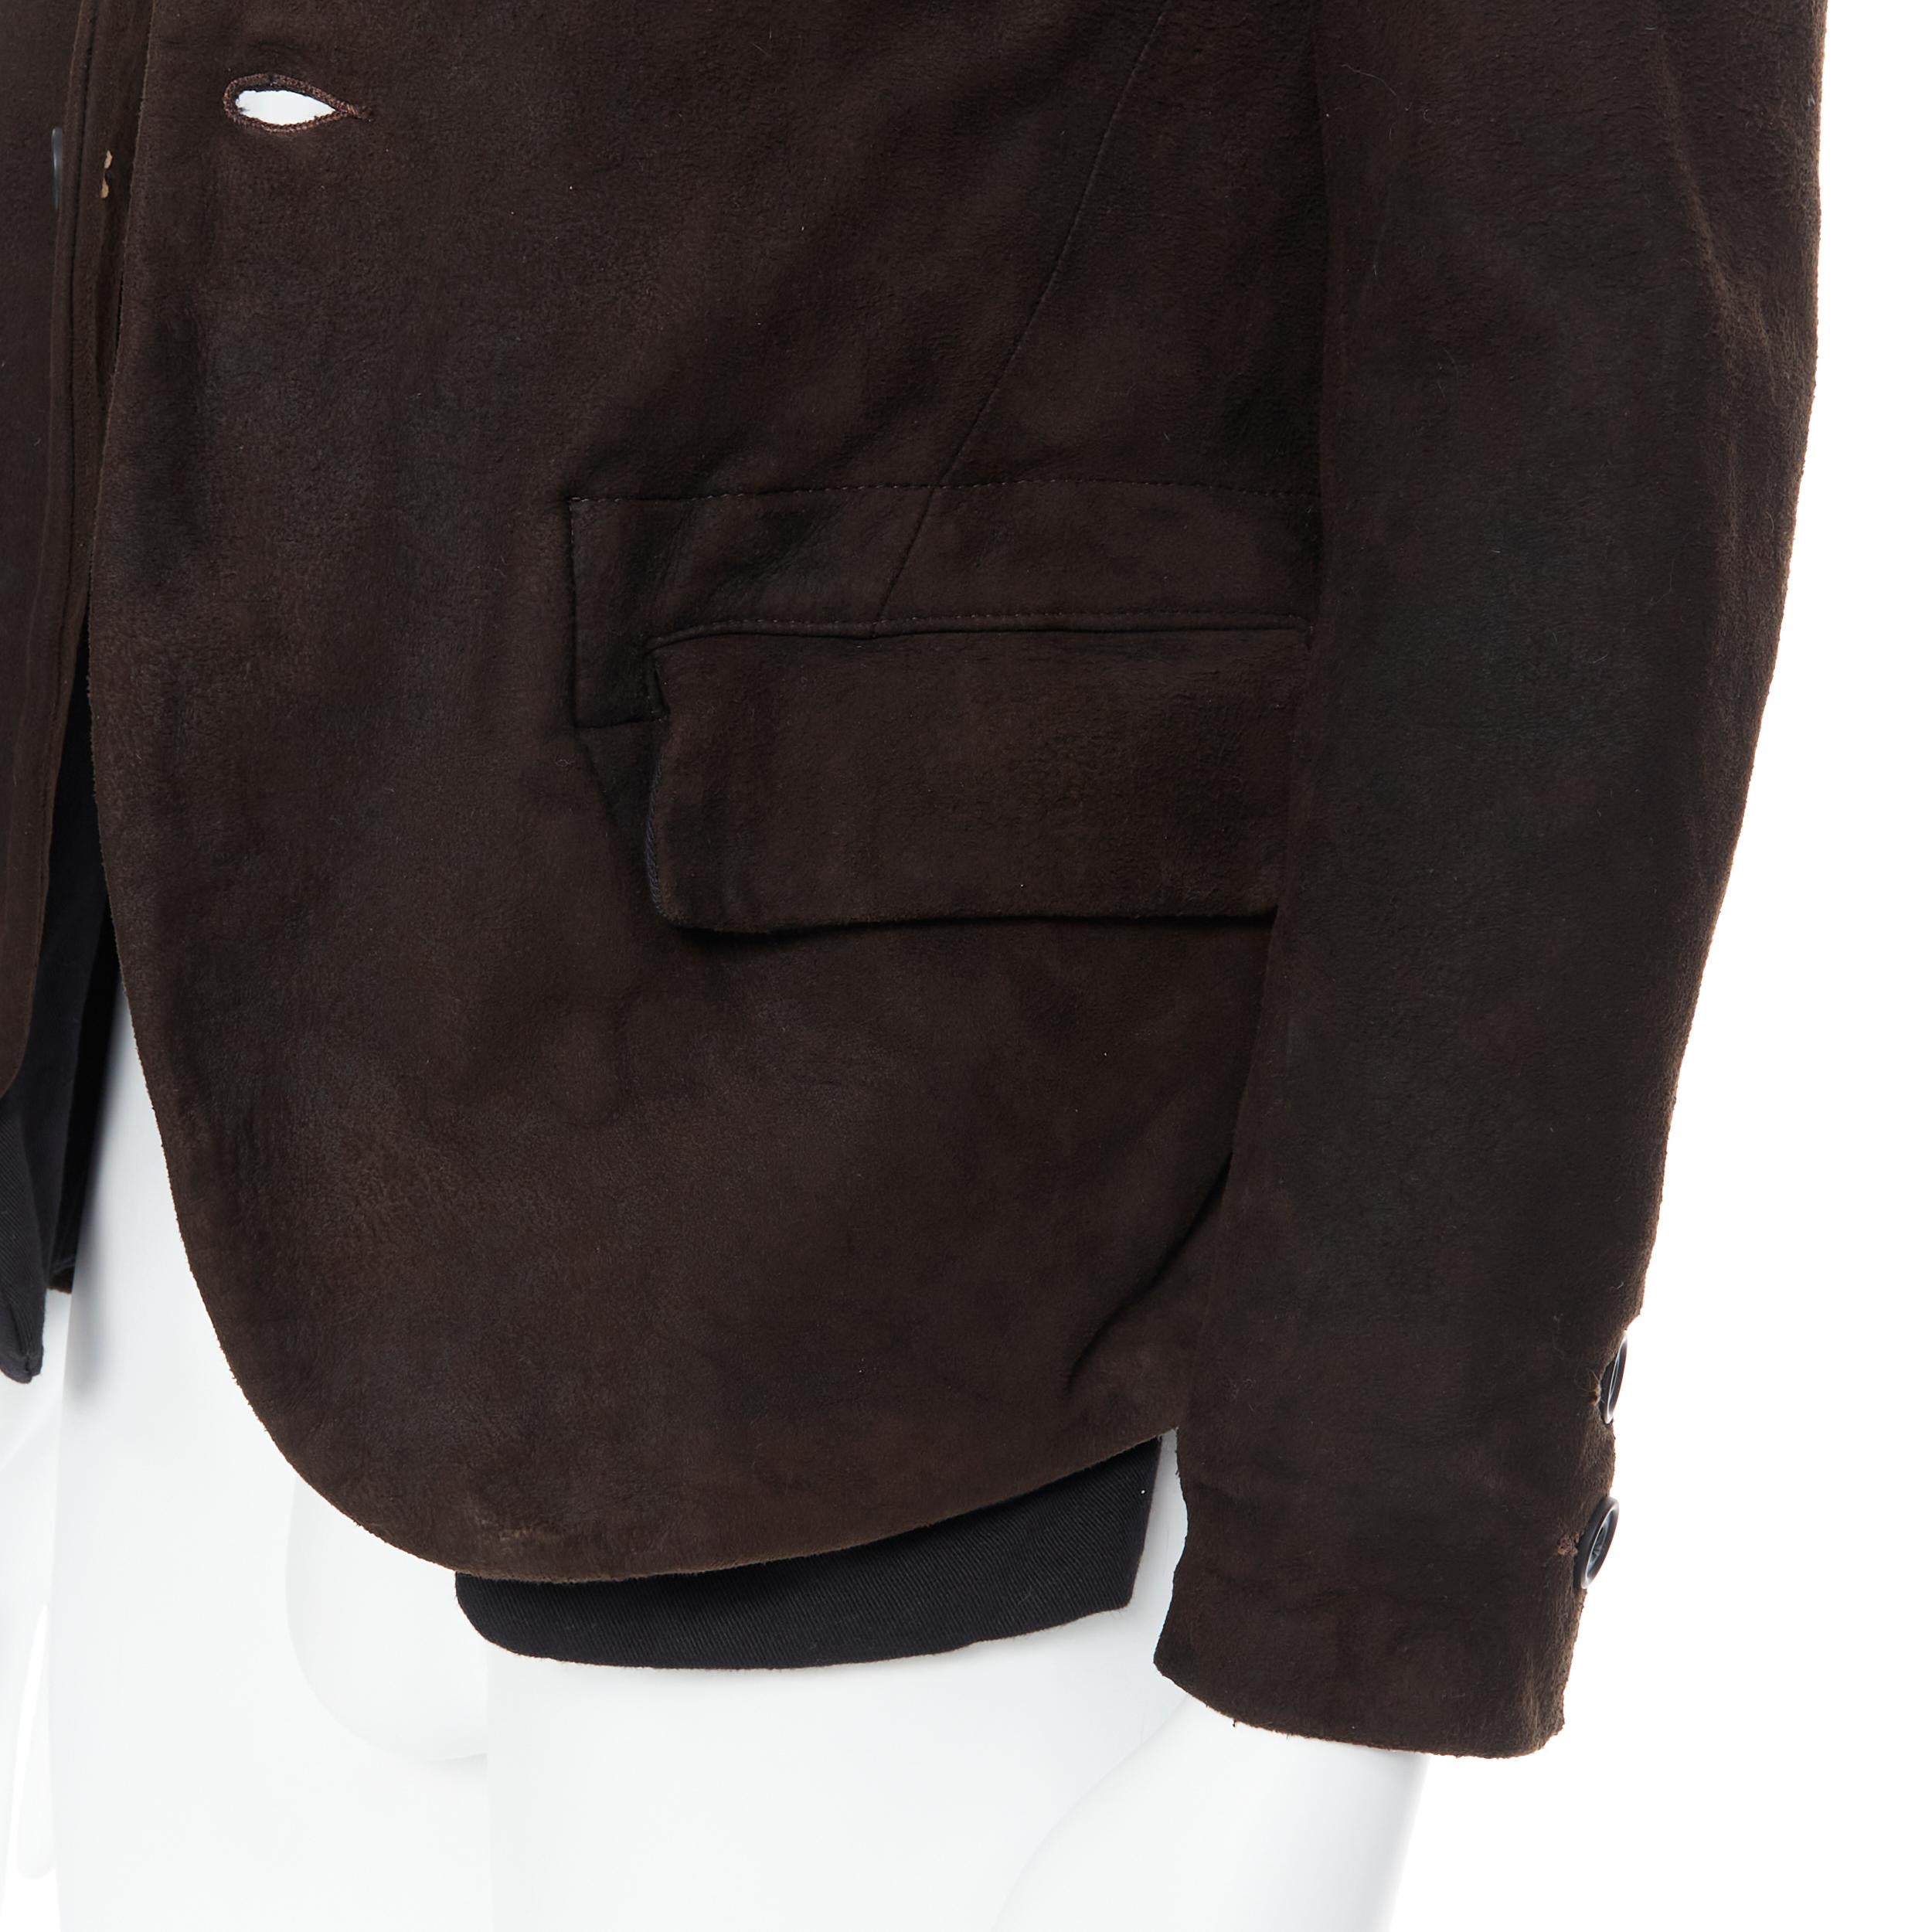 Paul Harnden - 3 For Sale on 1stDibs | paul harnden jacket, paul 